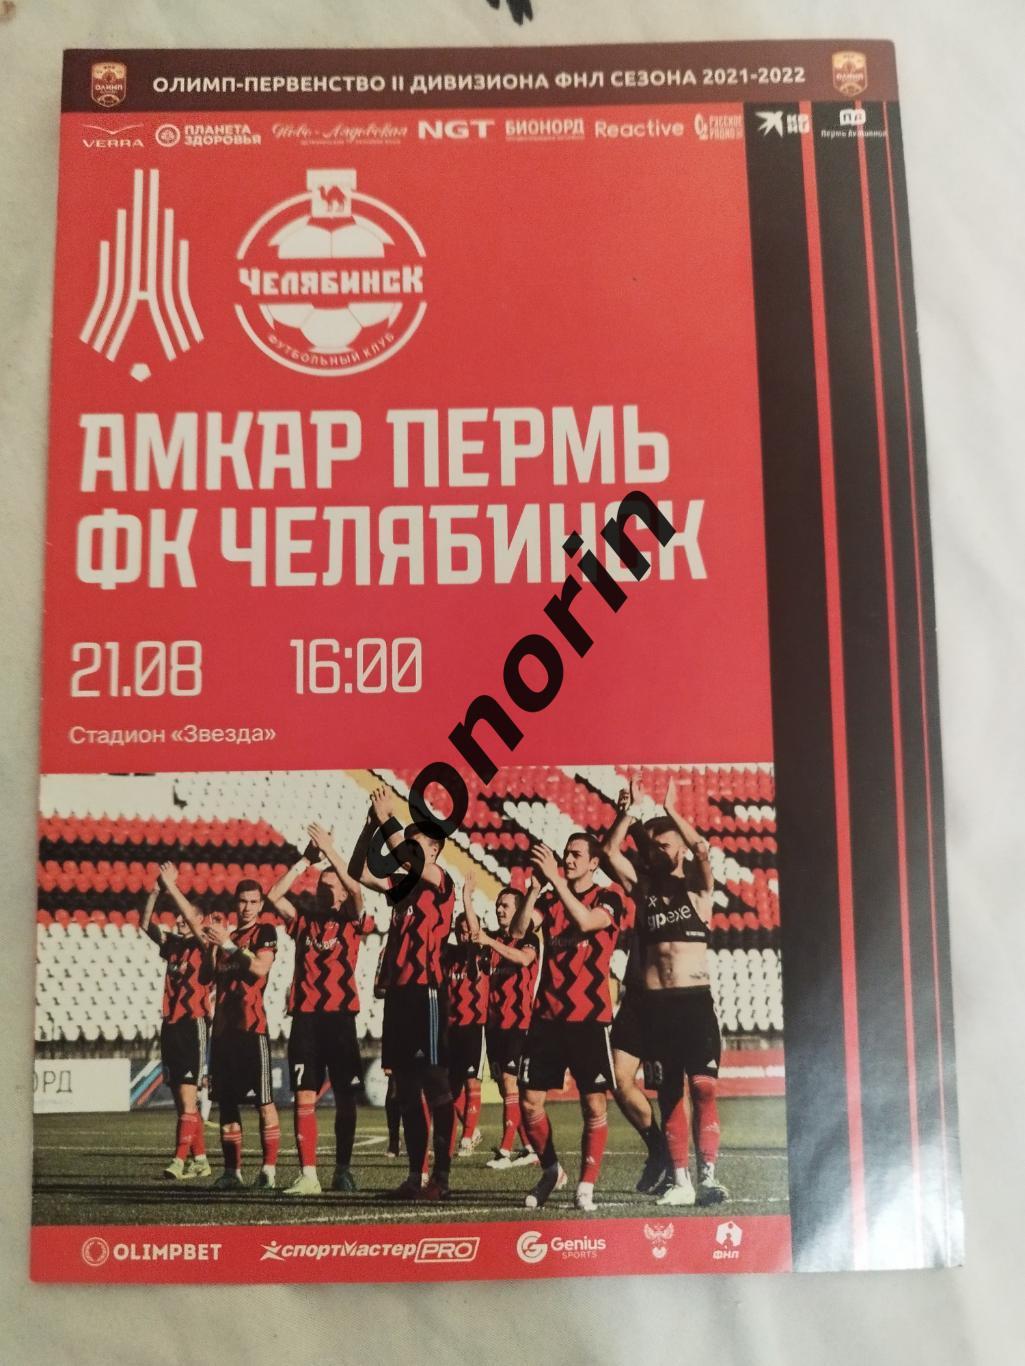 Амкар (Пермь) - ФК Челябинск 2021/2022